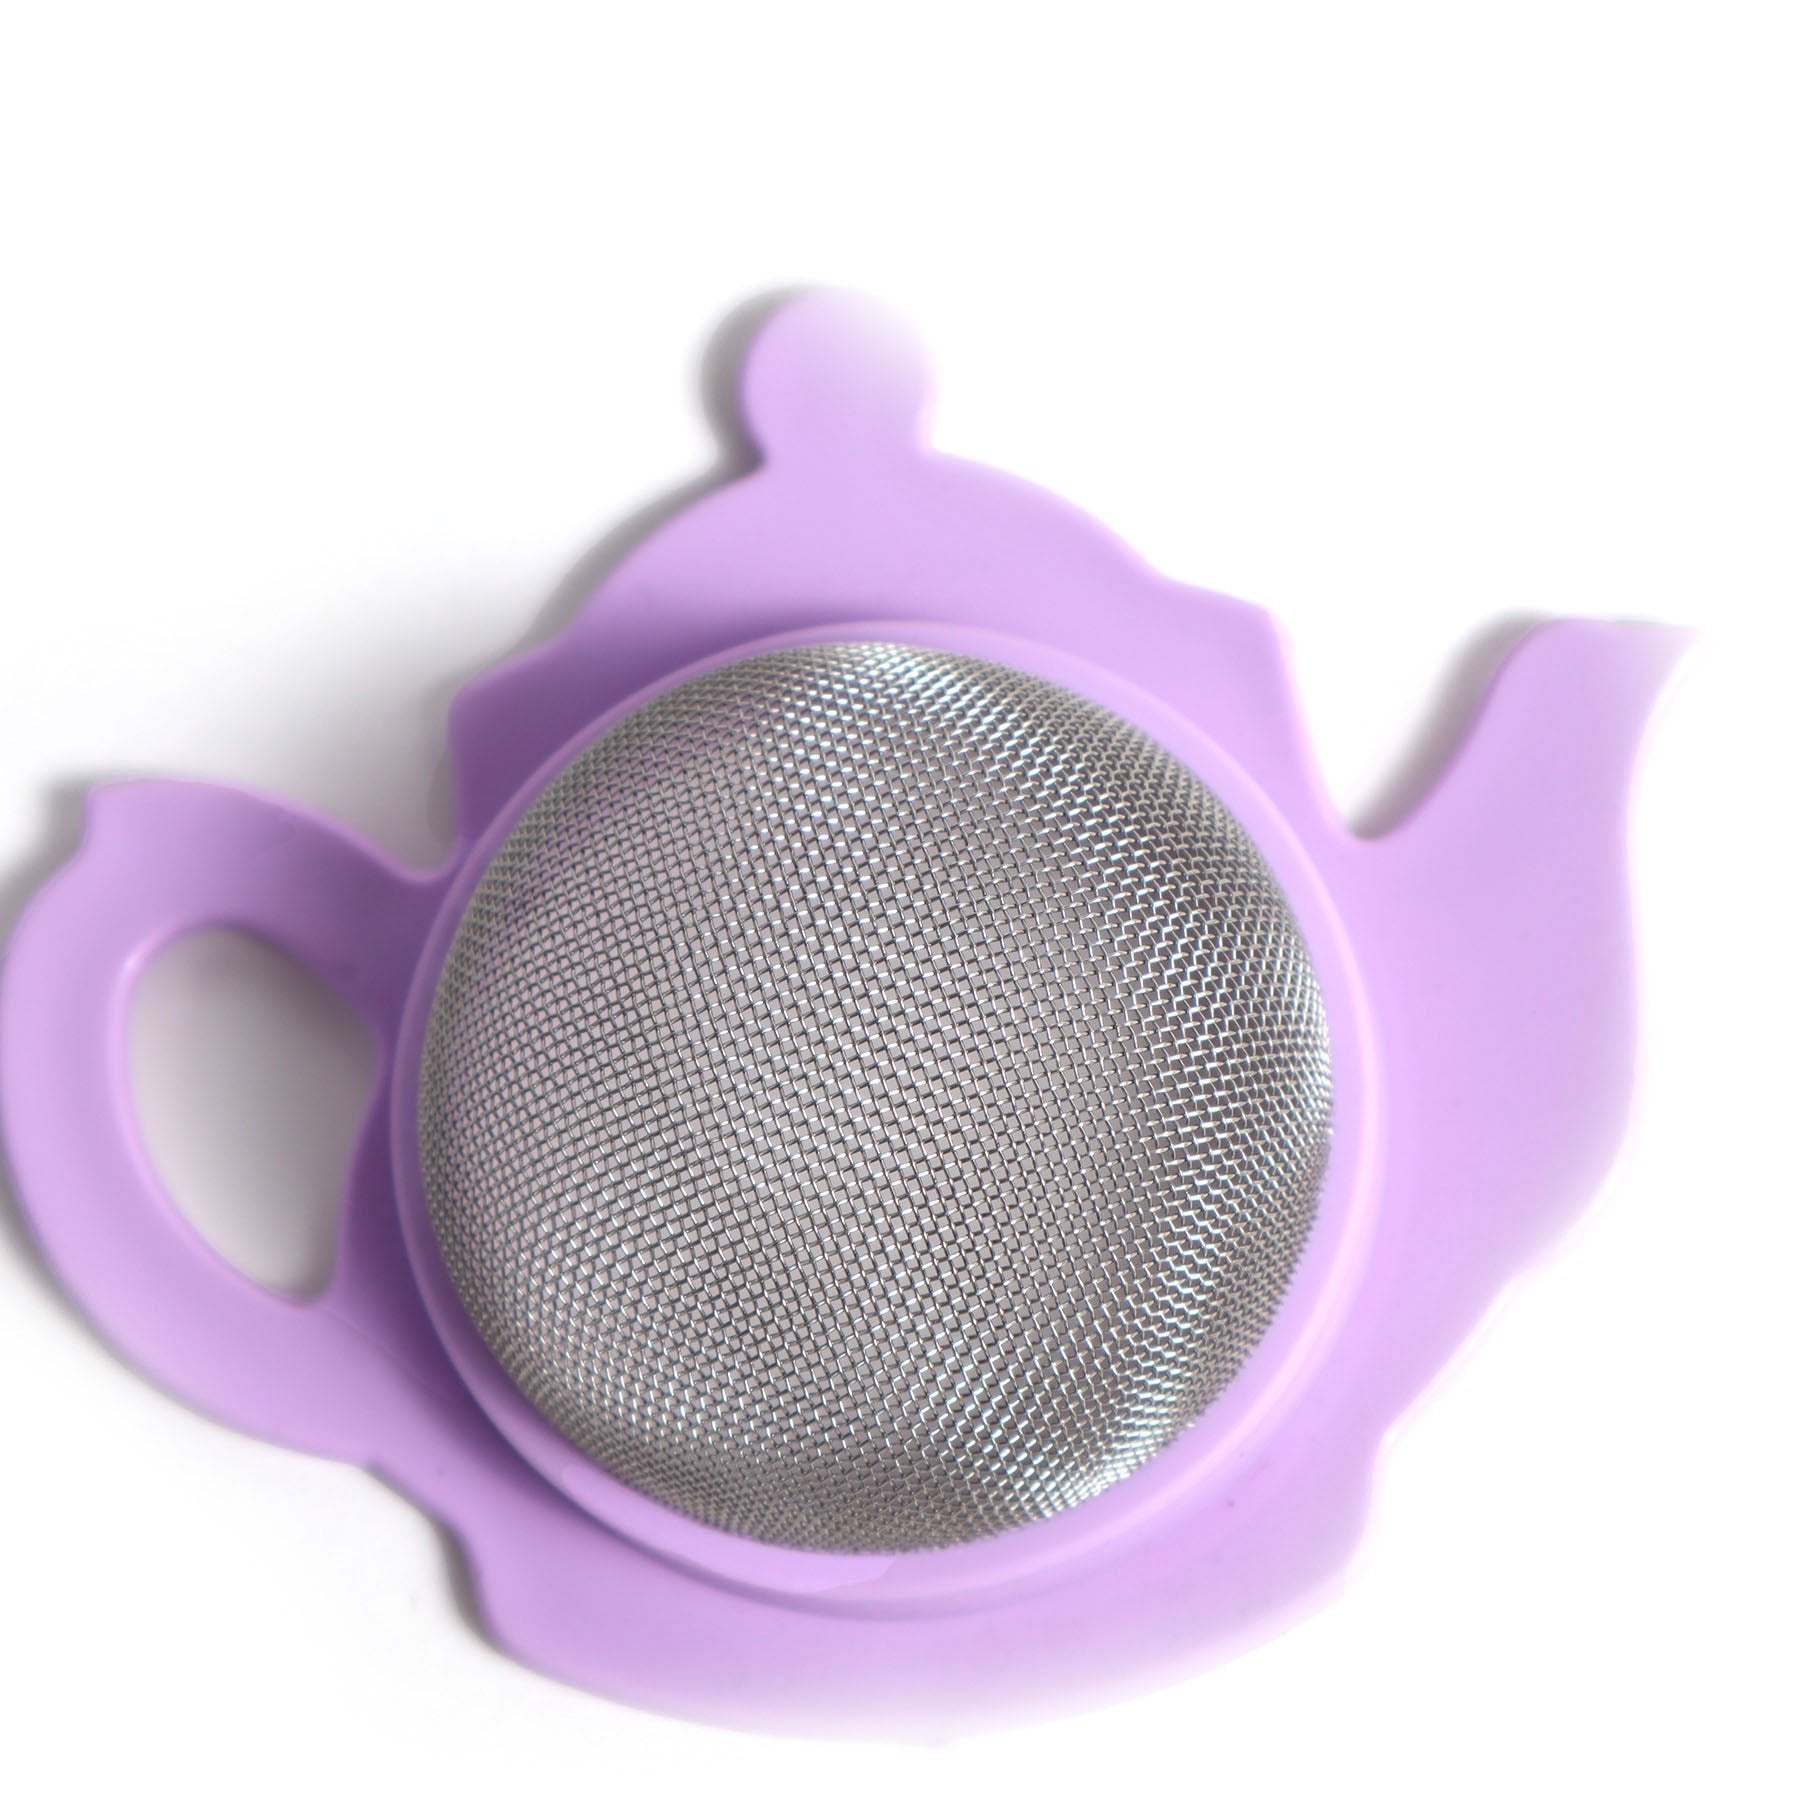 Stainless Steel Tea Infuser Set